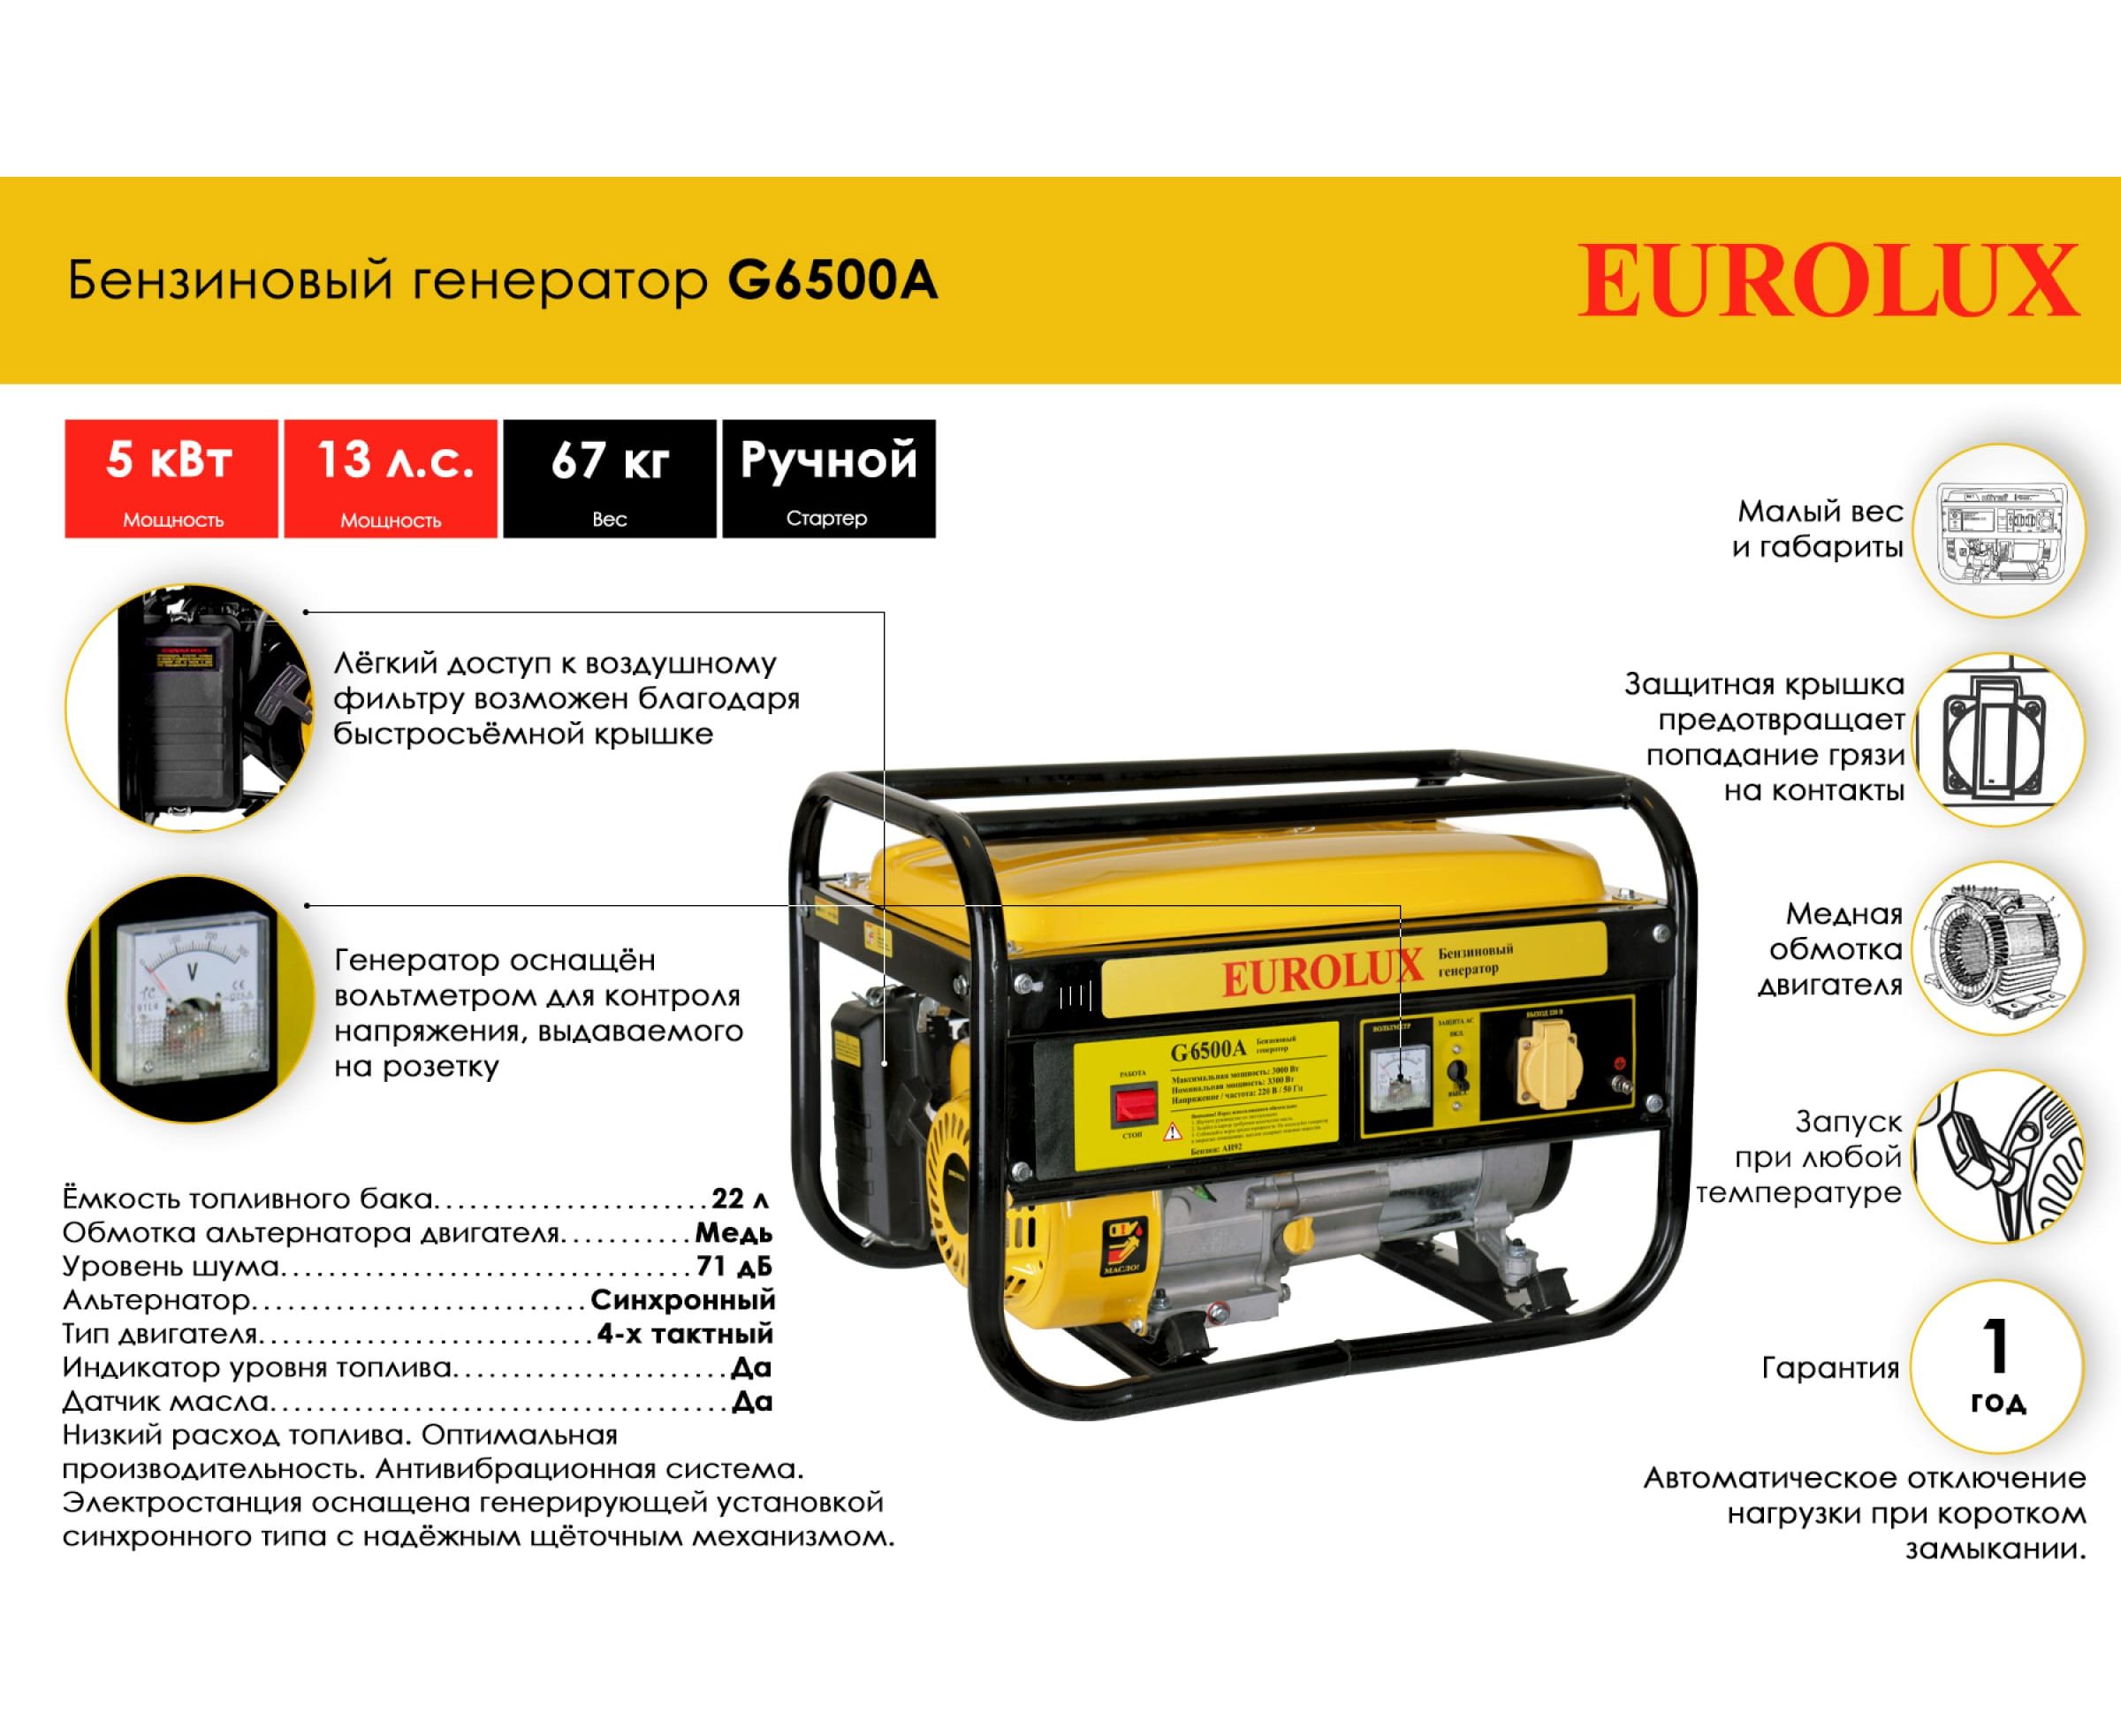 Eurolux g4000a. Электрогенератор g6500a Eurolux. Электрогенератор Eurolux g2700a. Электрогенератор Eurolux g6500a 64/1/42. Бензиновый Генератор Eurolux g2700a.